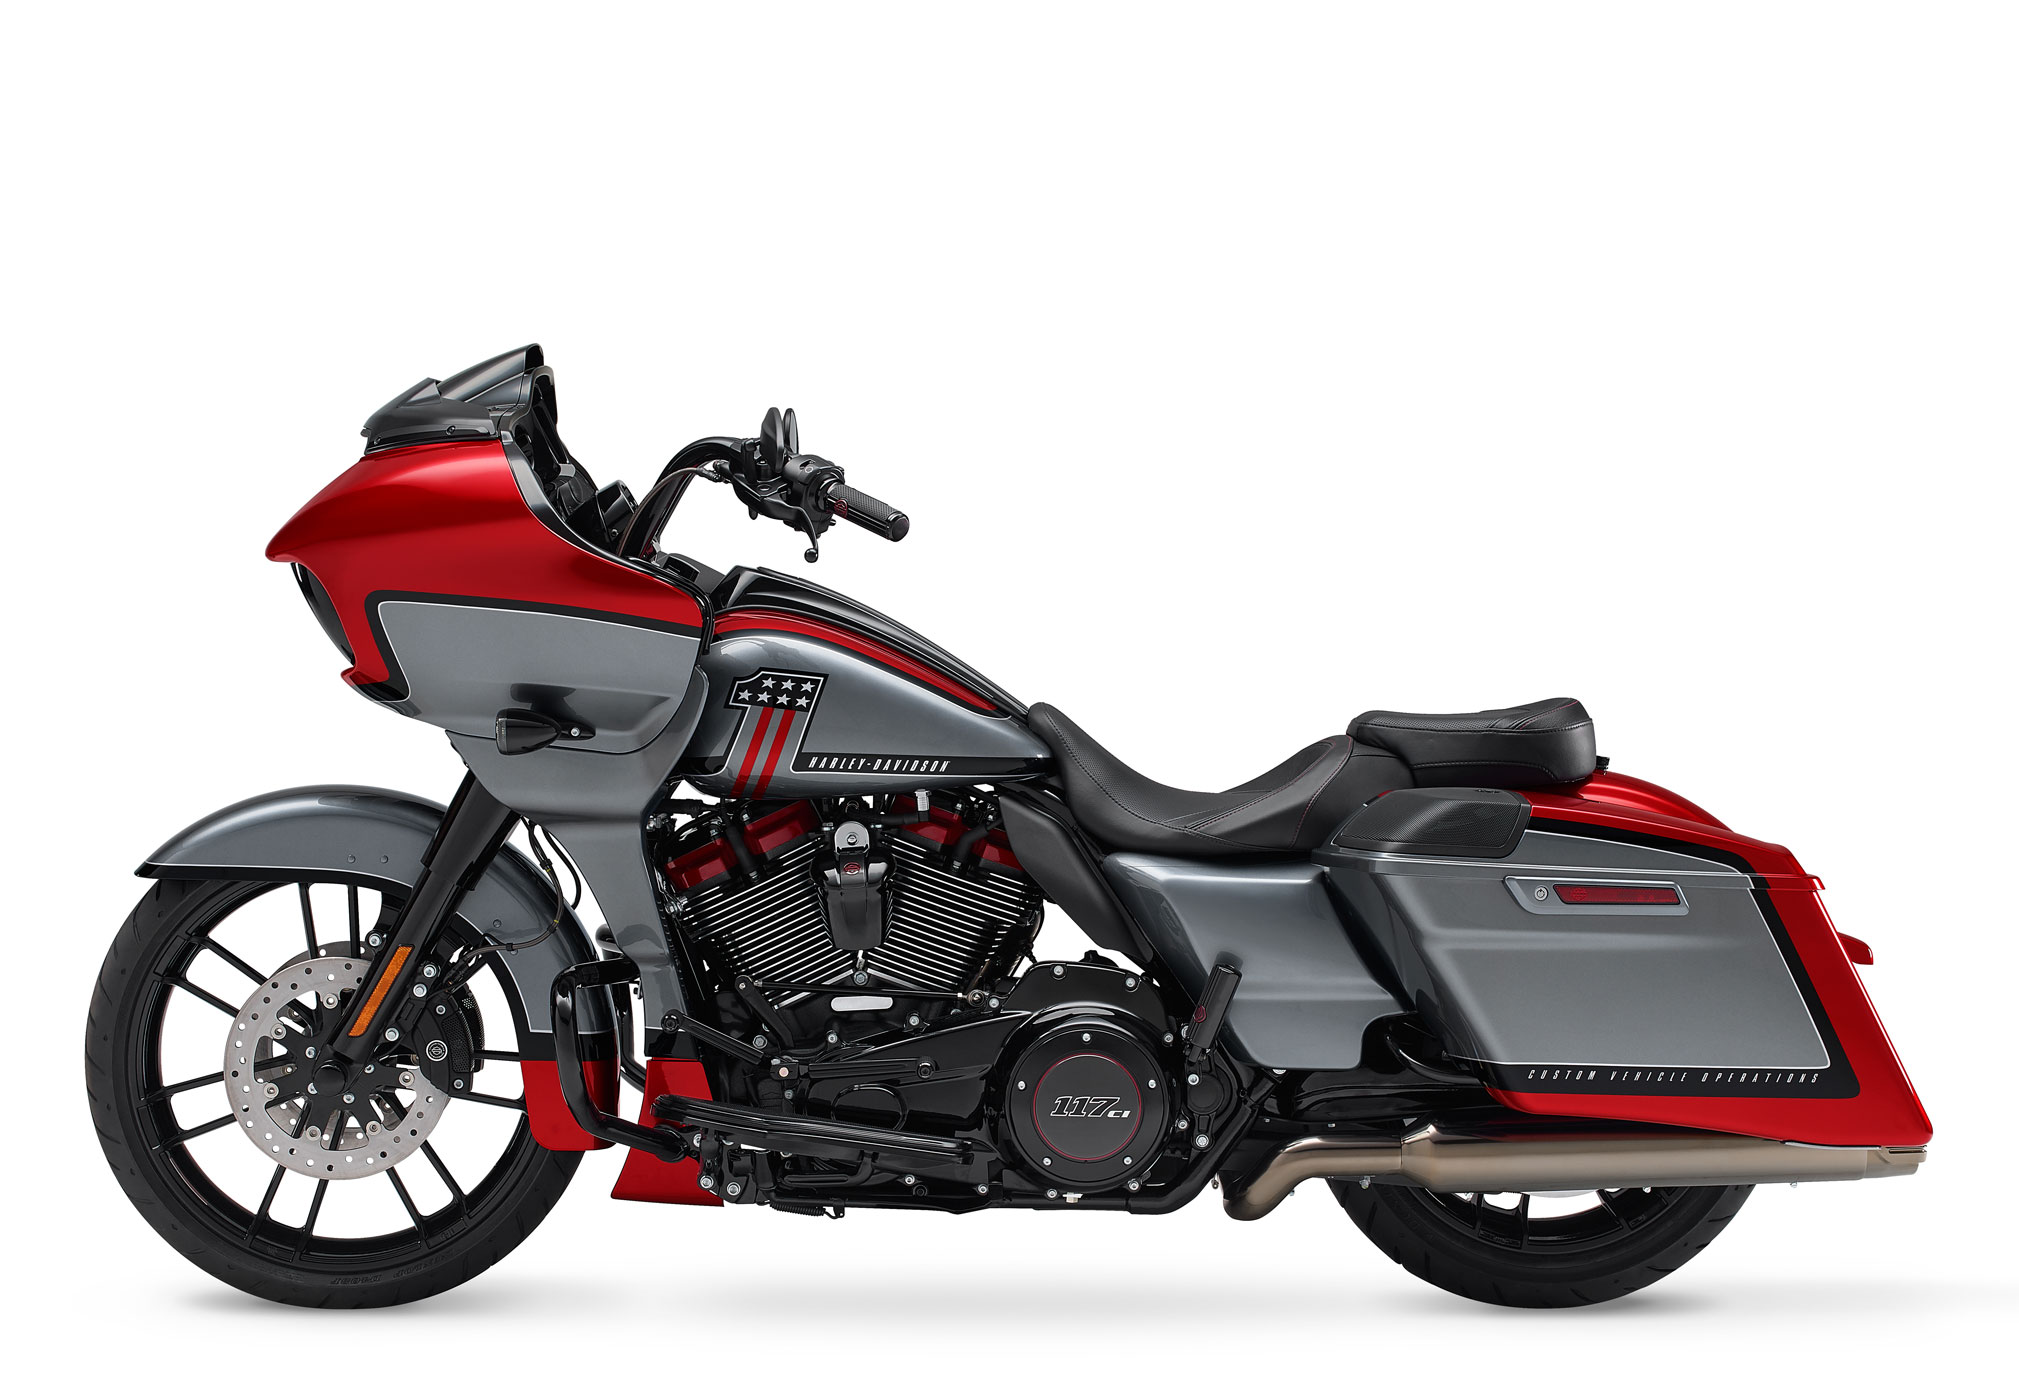 2019 Harley Davidson Cvo Road Glide Guide Total Motorcycle